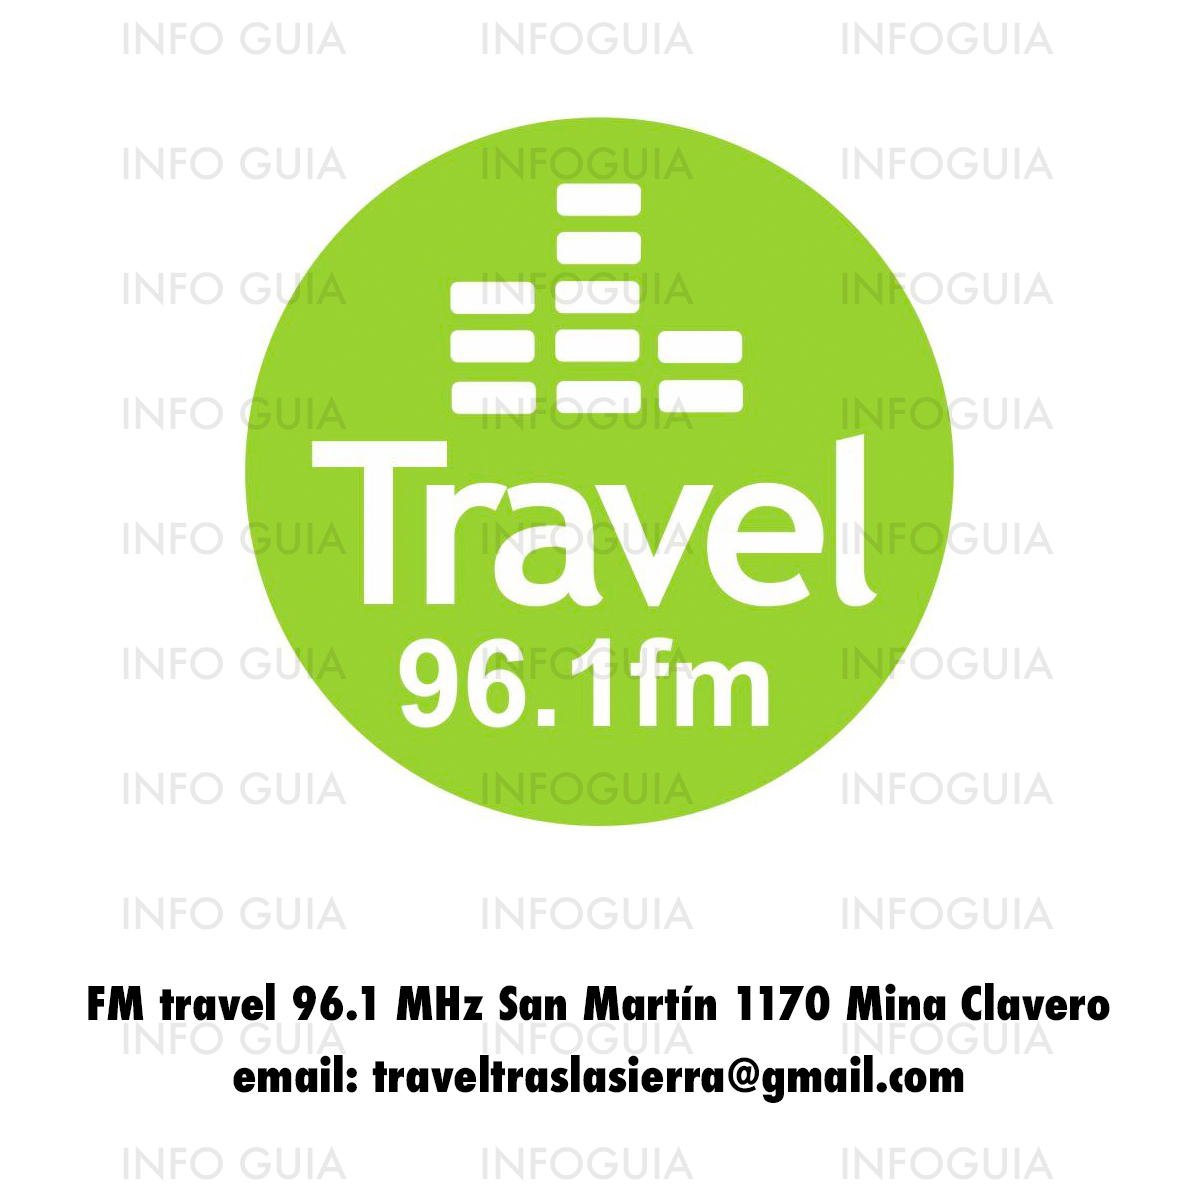 FM Travel Traslasierra - Mina Clavero - Radio FM 96.1 MHz